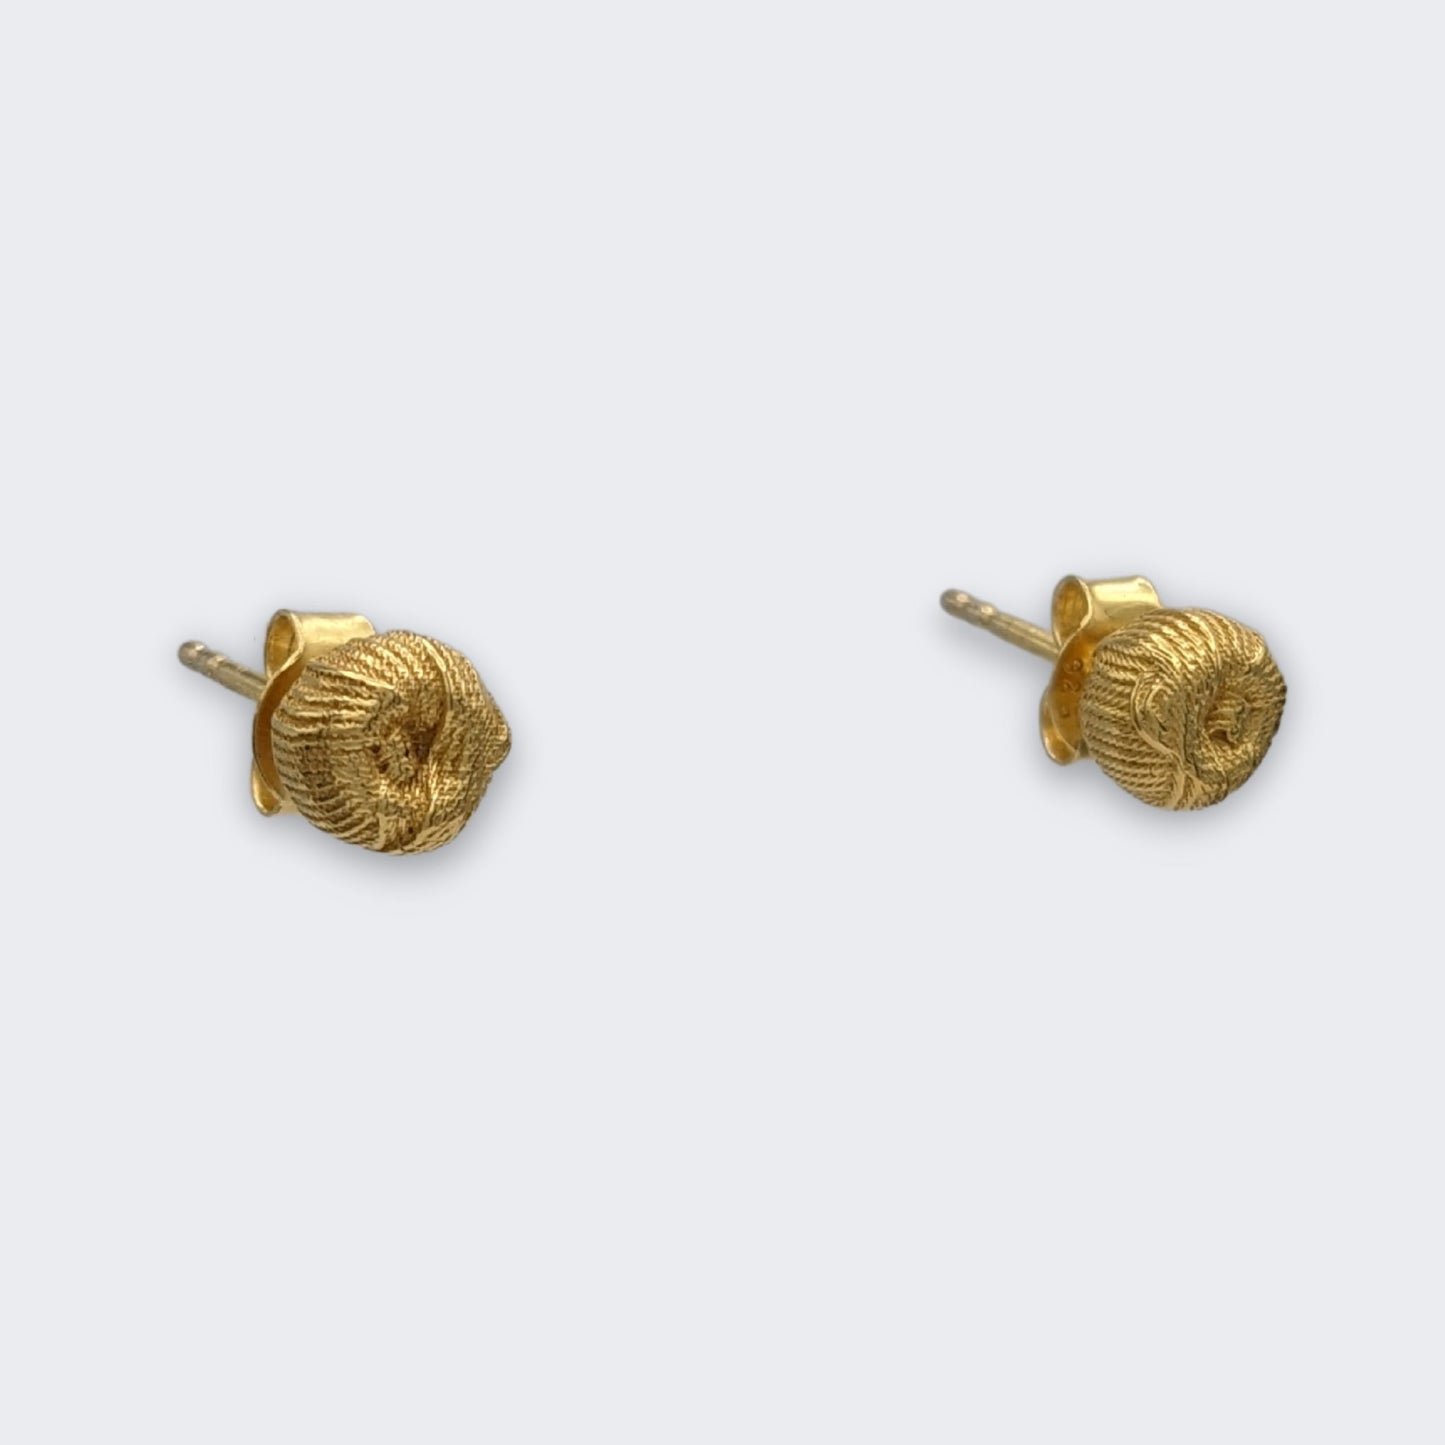 ren yarn stud earrings in 18k gold vermeil pair (right side view)